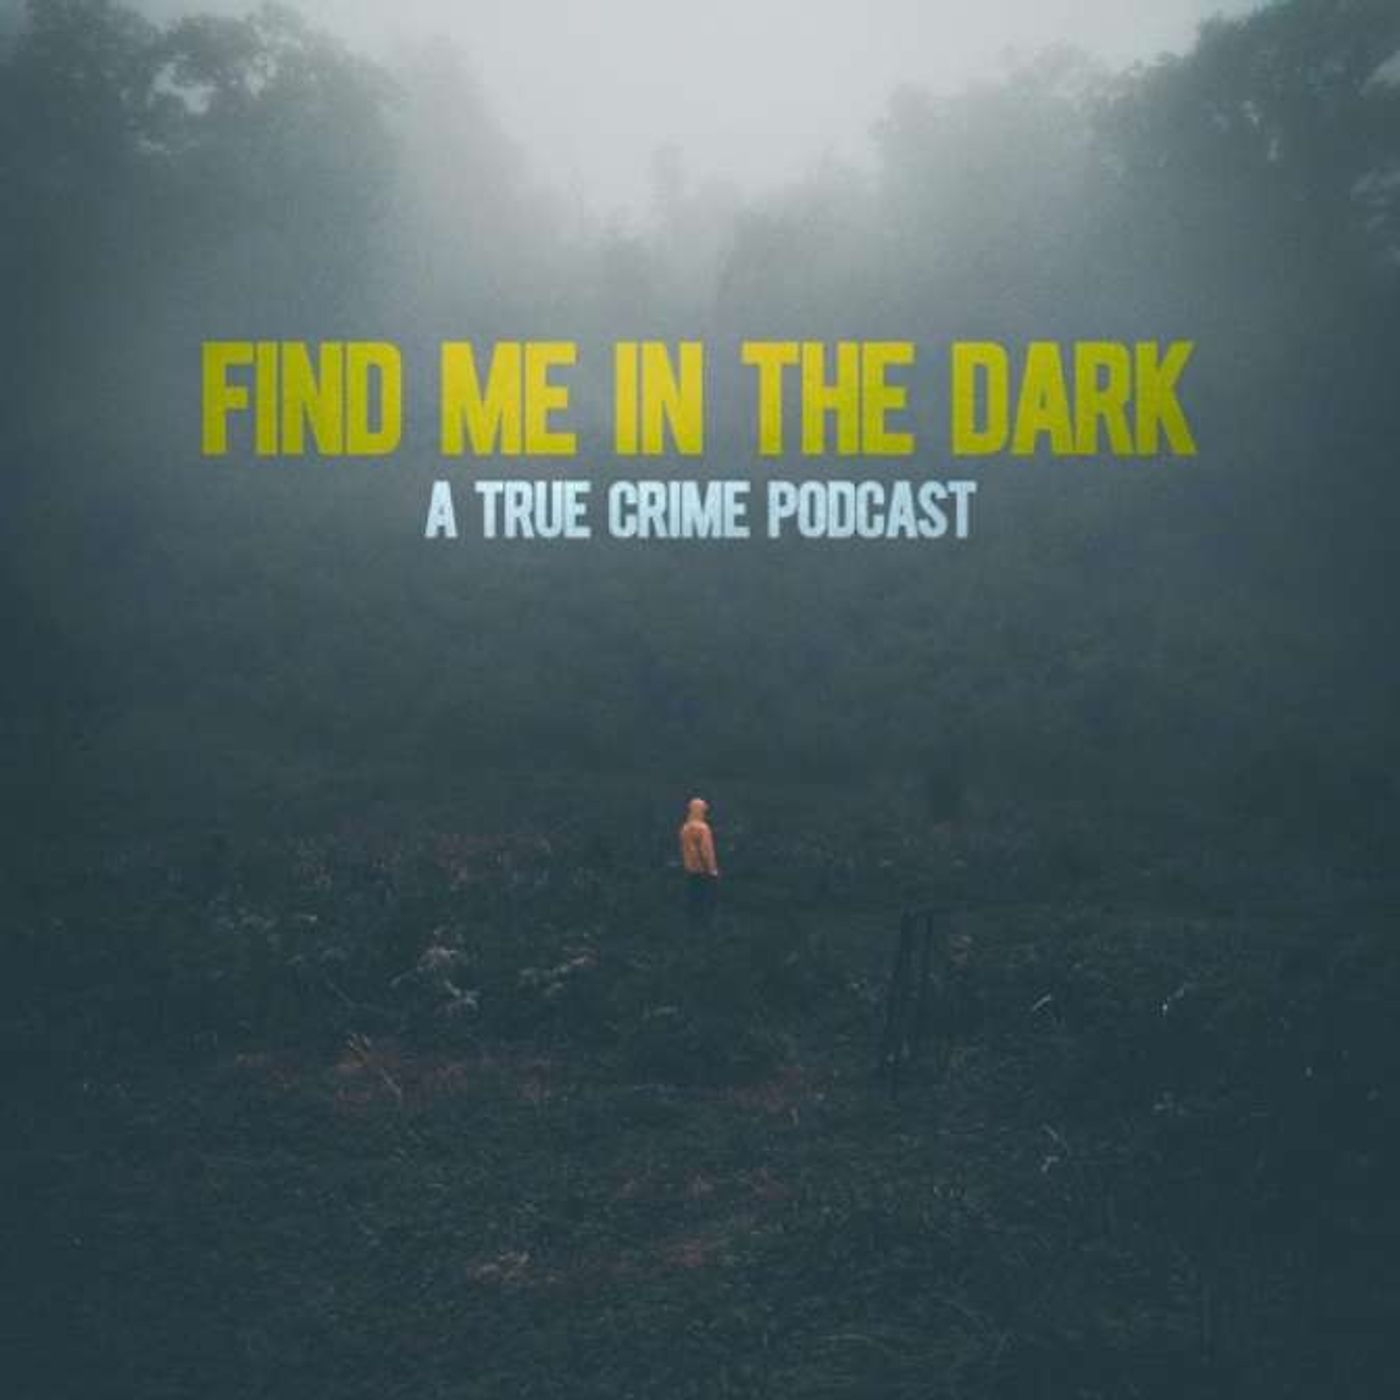 Meet Our Friend: Find Me In The Dark